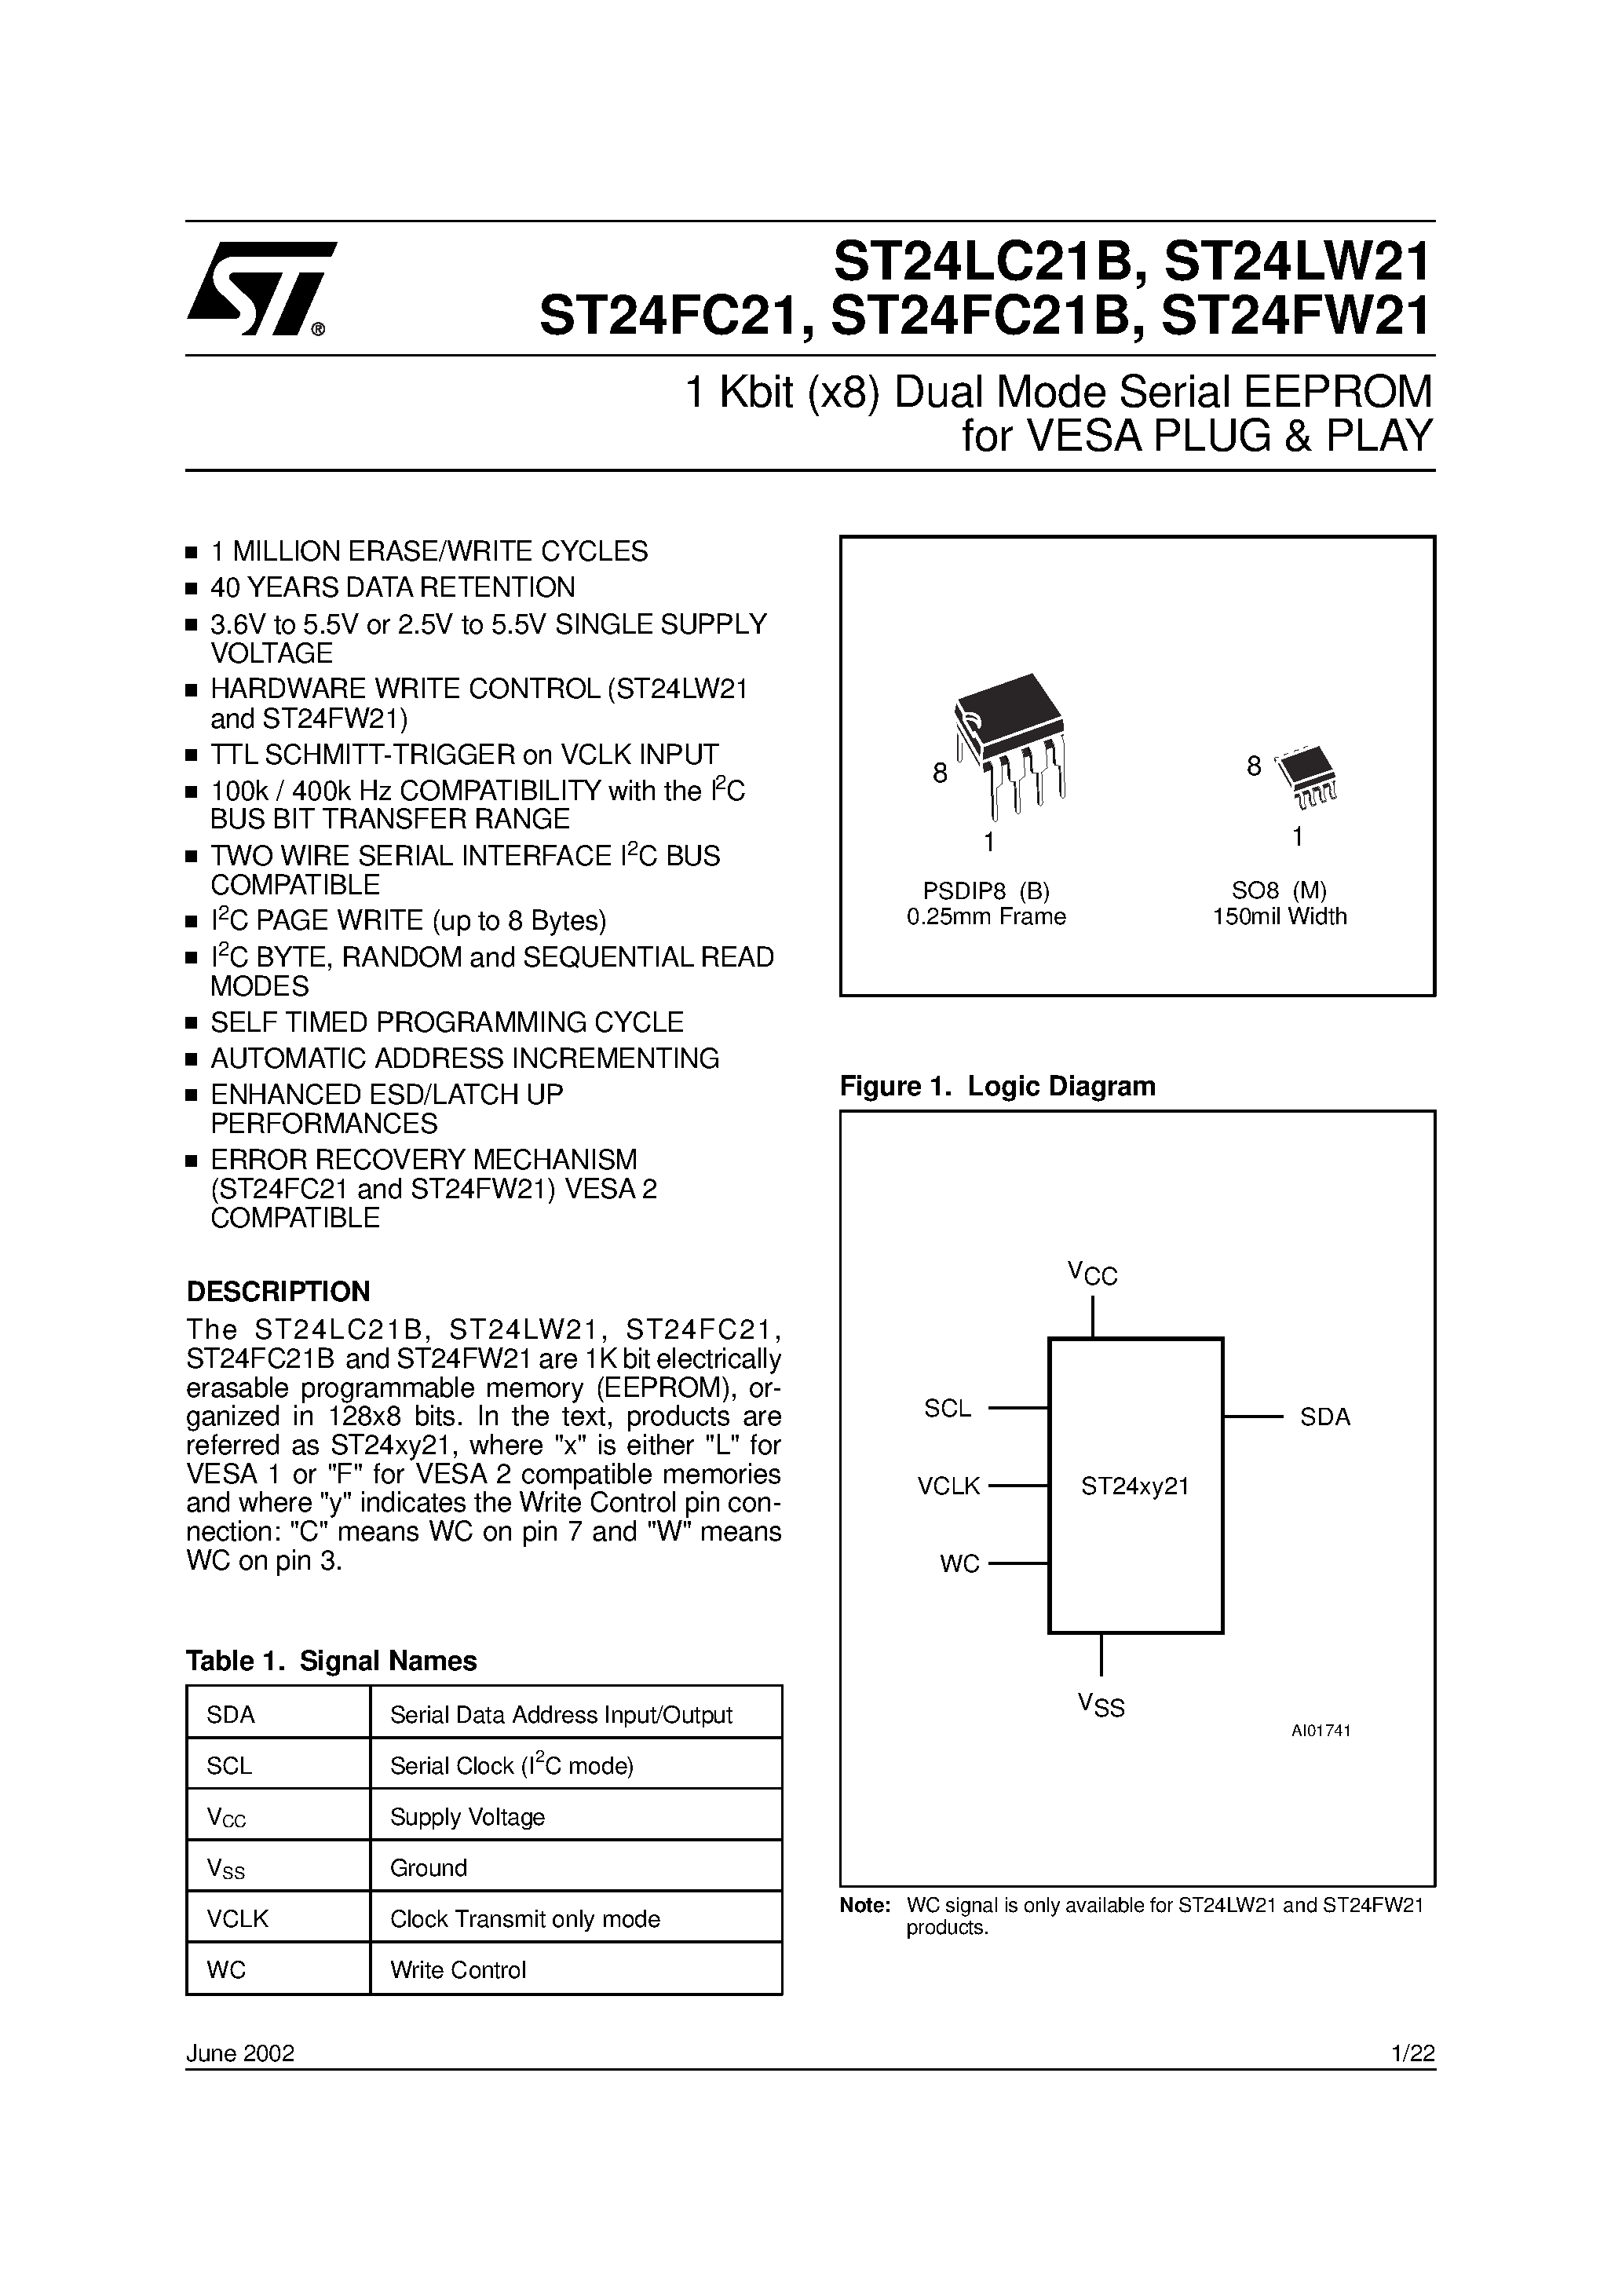 Datasheet ST24FW21 - 1 Kbit x8 Dual Mode Serial EEPROM for VESA PLUG & PLAY page 1